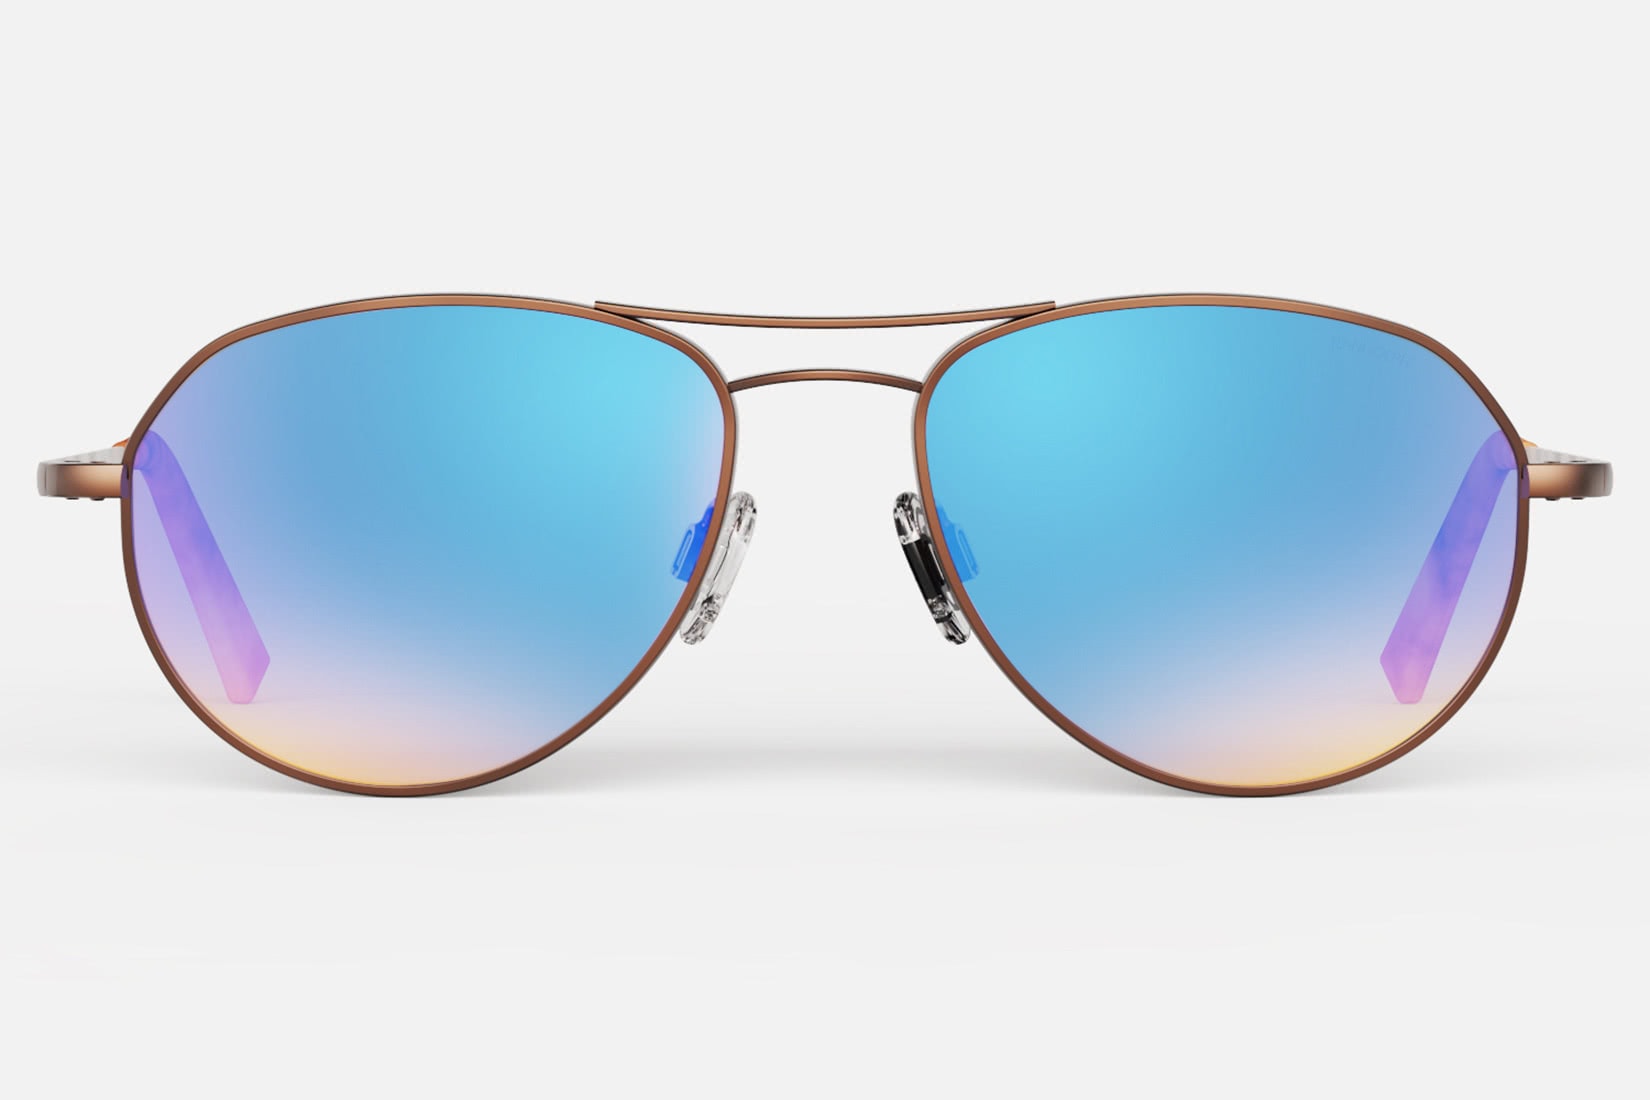 Randolph USA thaden women sunglasses review - Luxe Digital